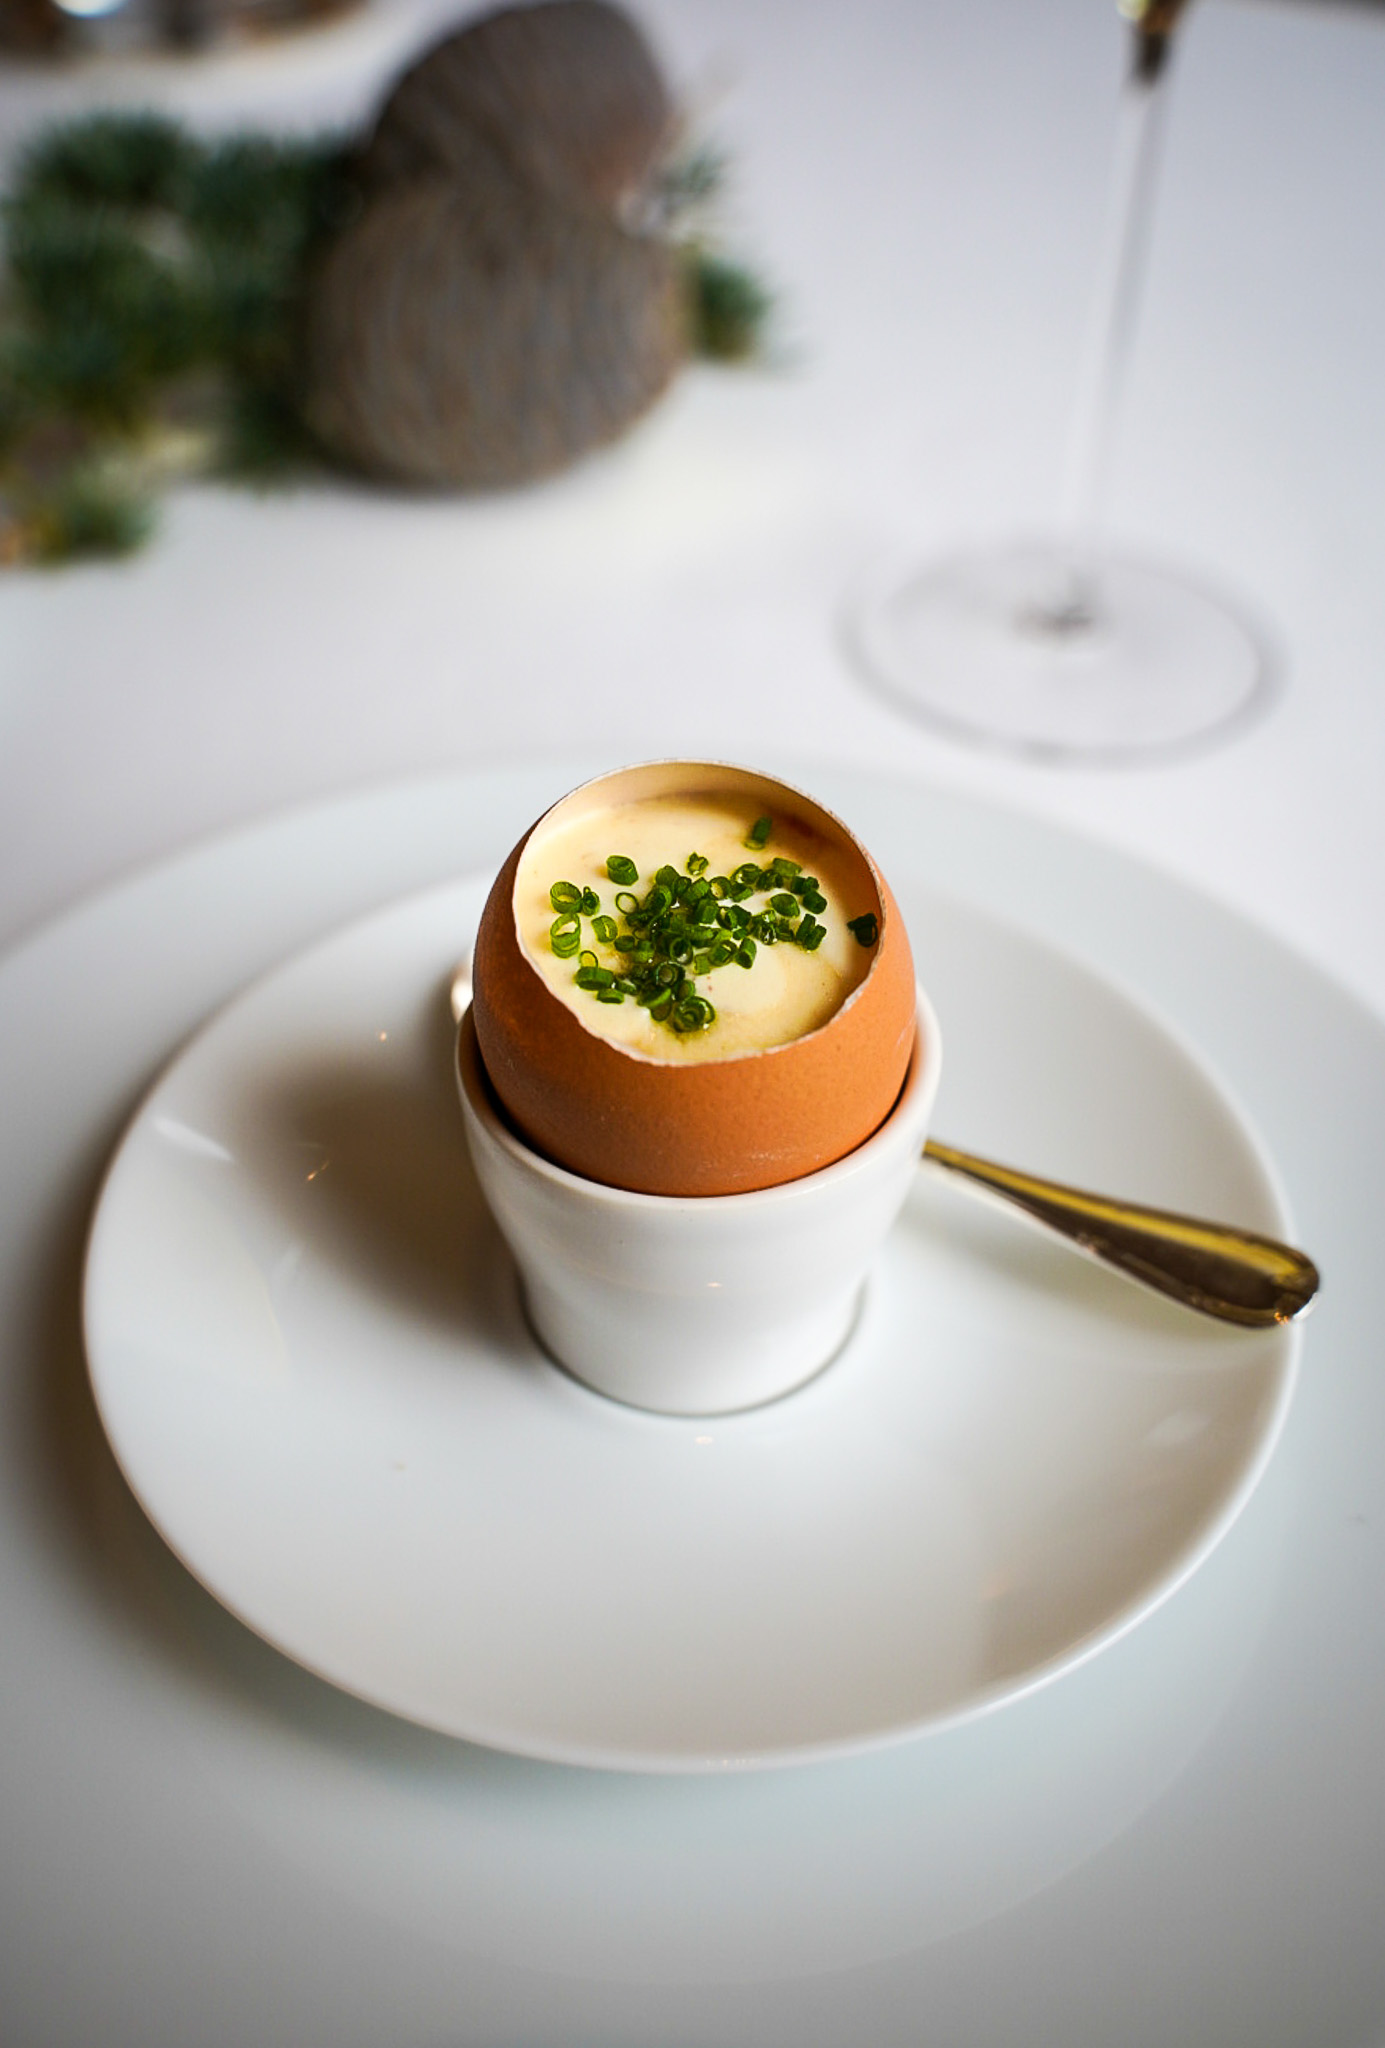 Chaud-Froid d’Oeuf hot cold egg Arpege Paris France